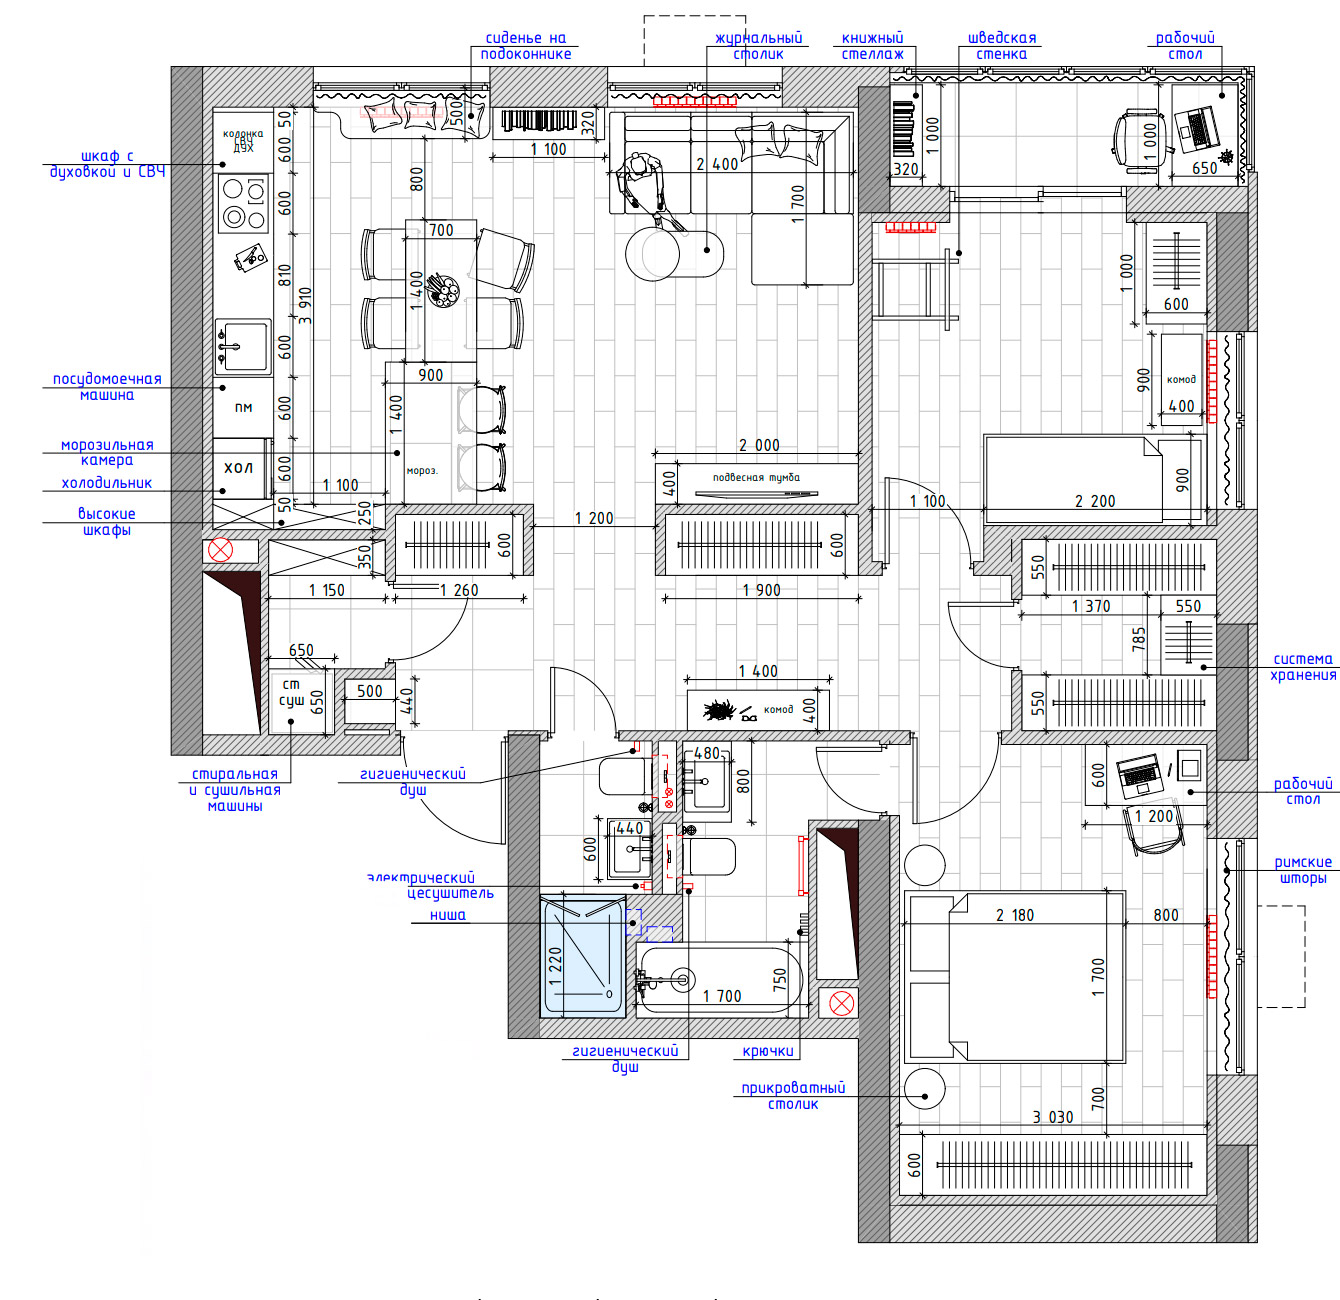 Технический дизайн-проект квартиры за 890р/м2 от студии RemPlanner